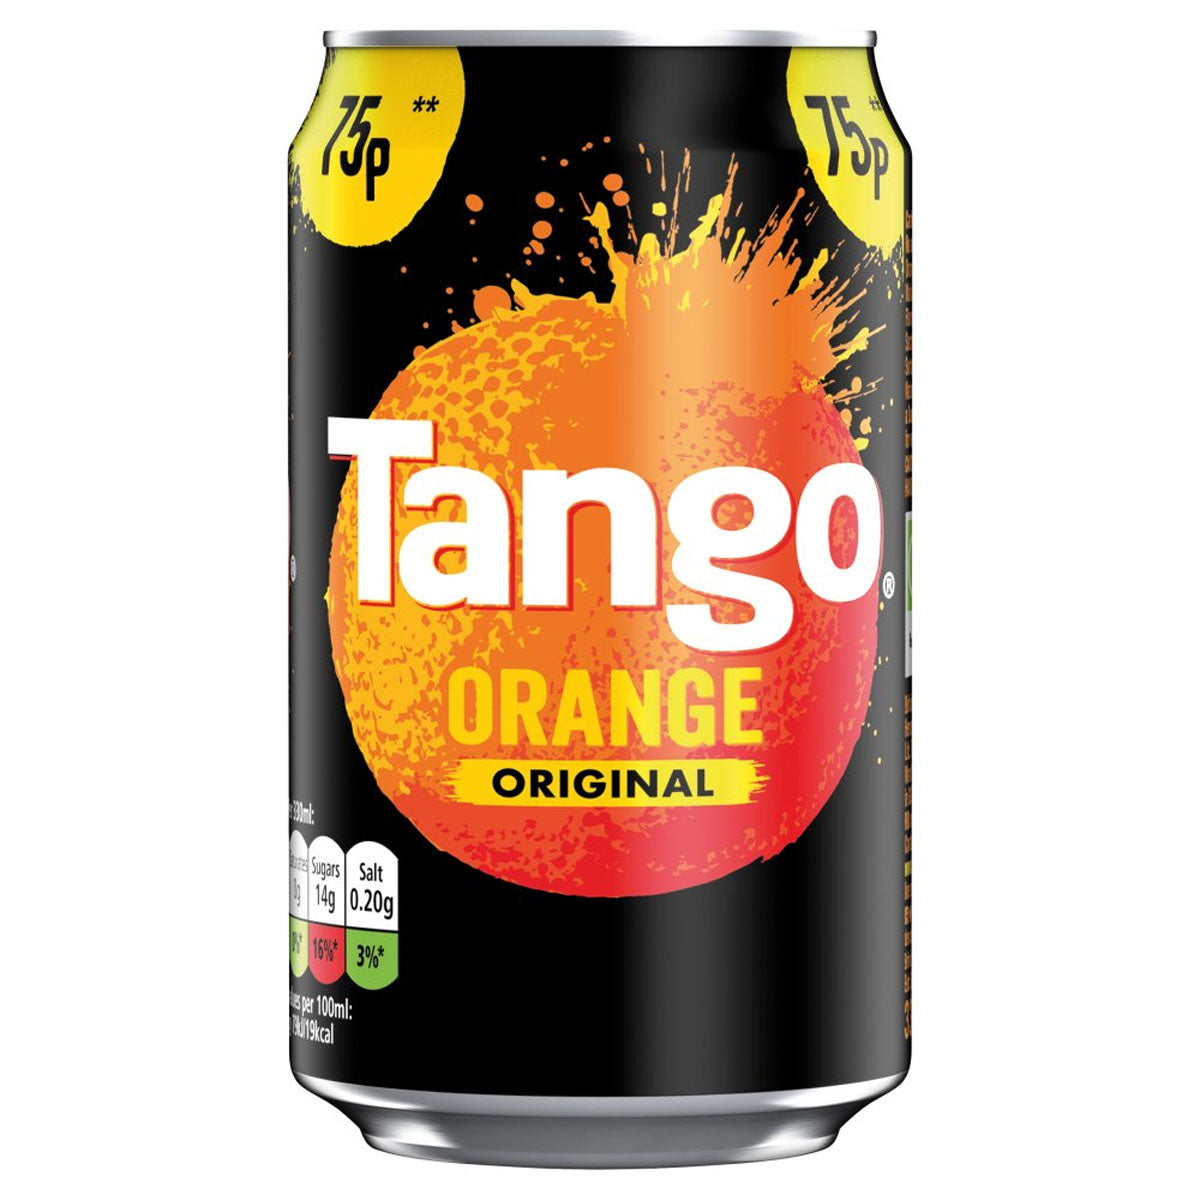 A Tango - Orange Original Can - 330ml on a white background.